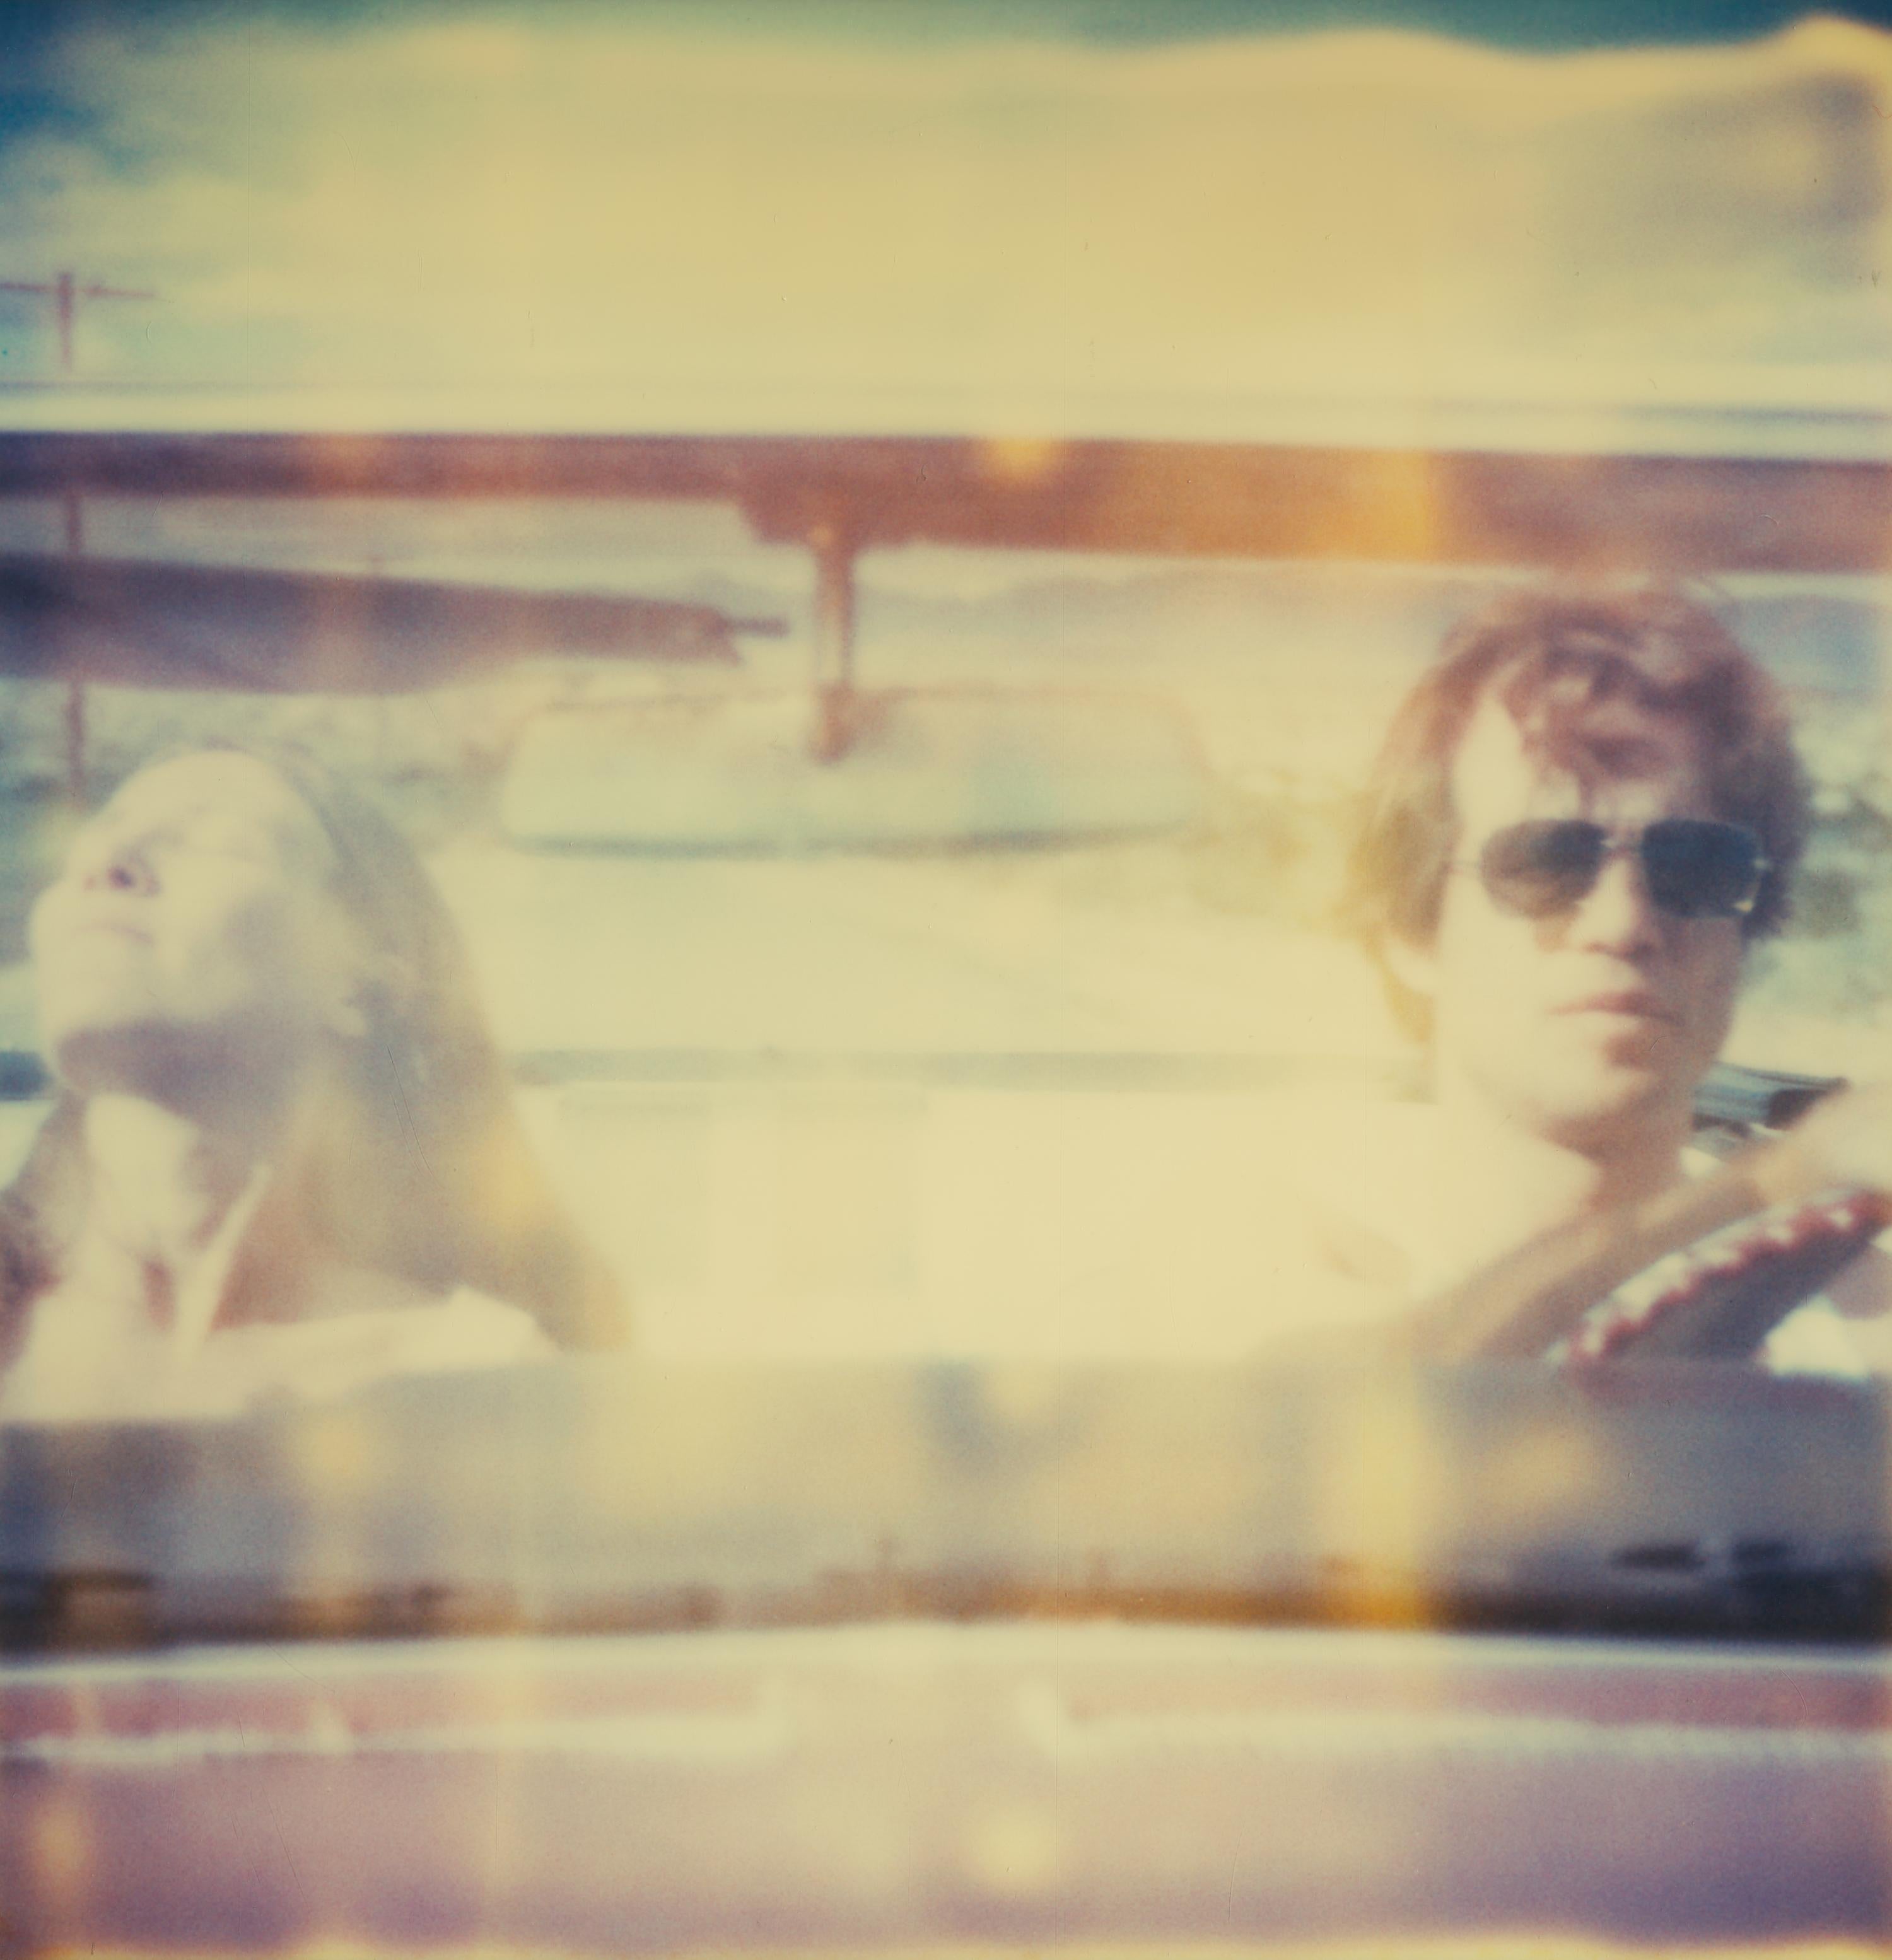 Stefanie Schneider Color Photograph - Leaving Town (Sidewinder) - based on a Polaroid